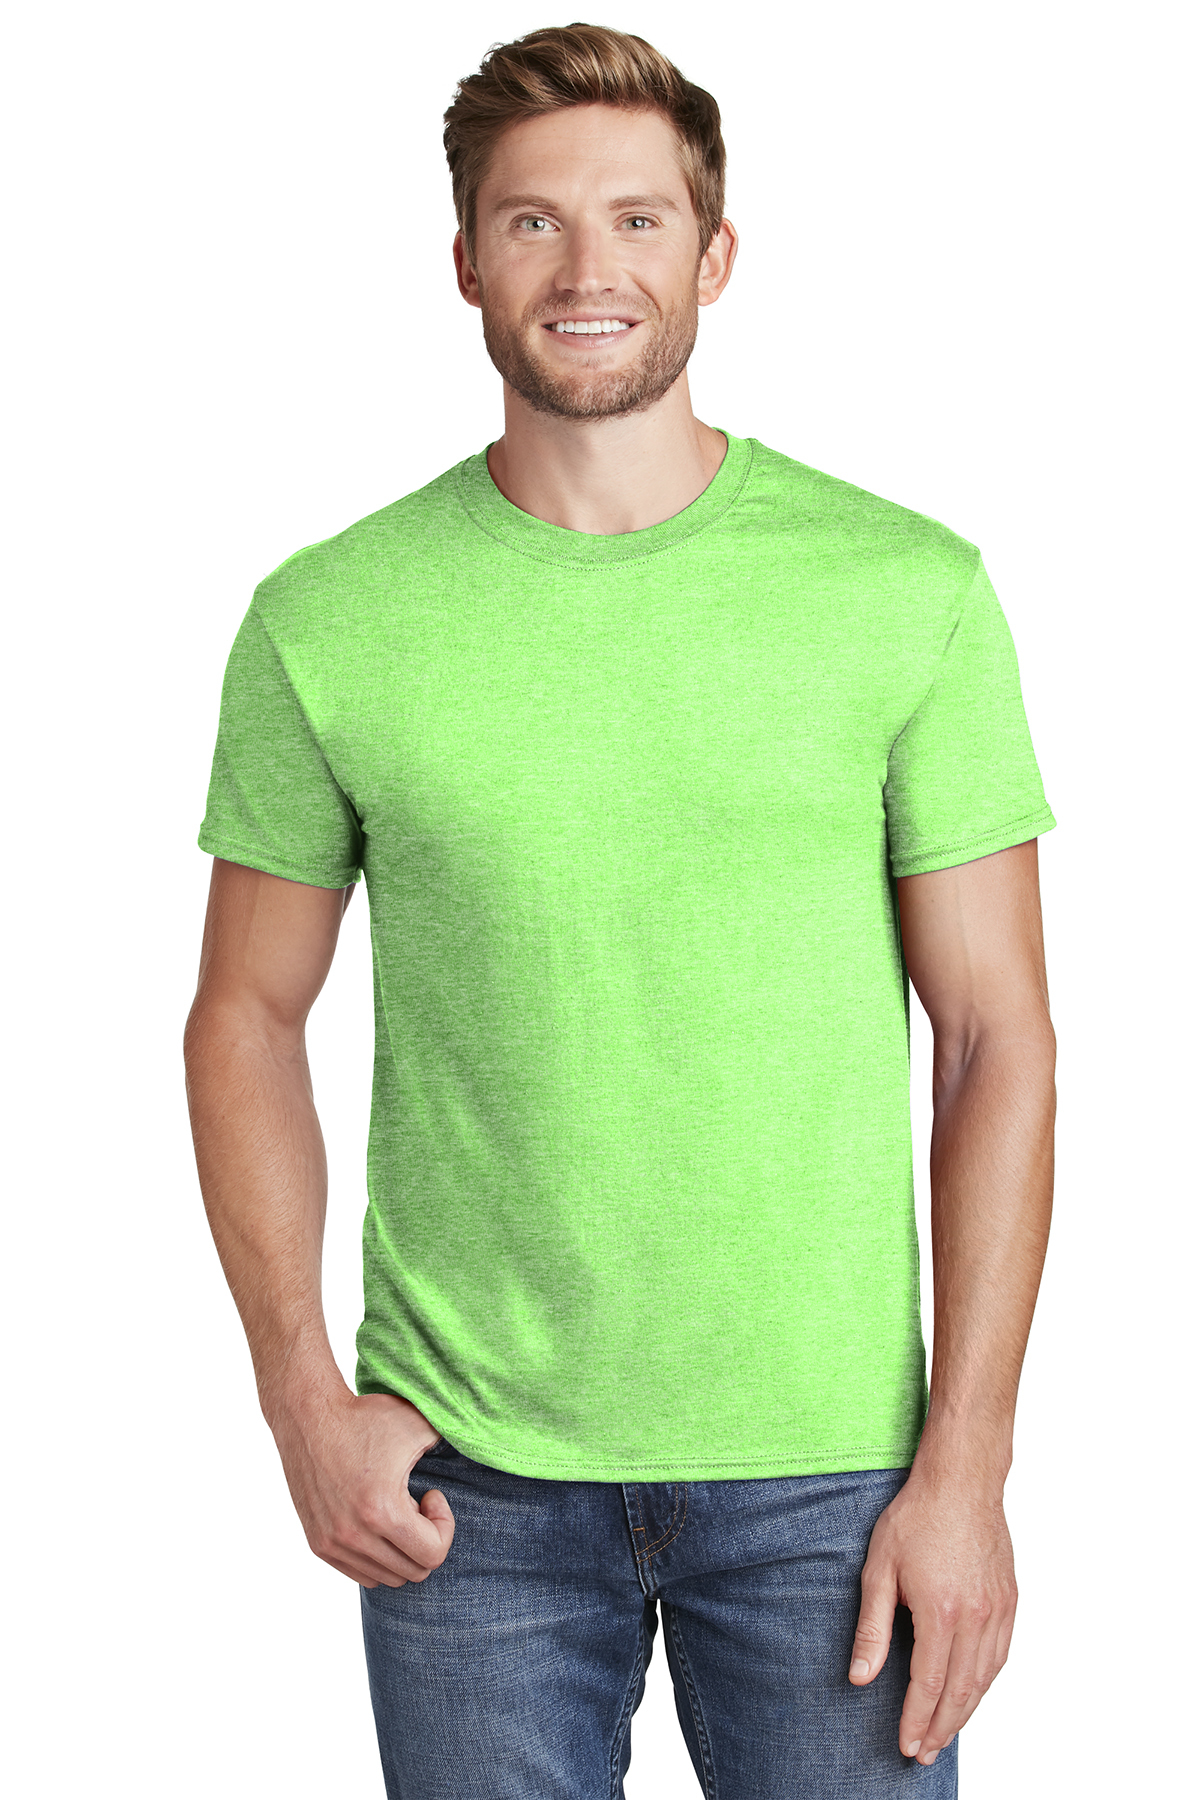 Hanes X-Temp T-Shirt | Product | SanMar